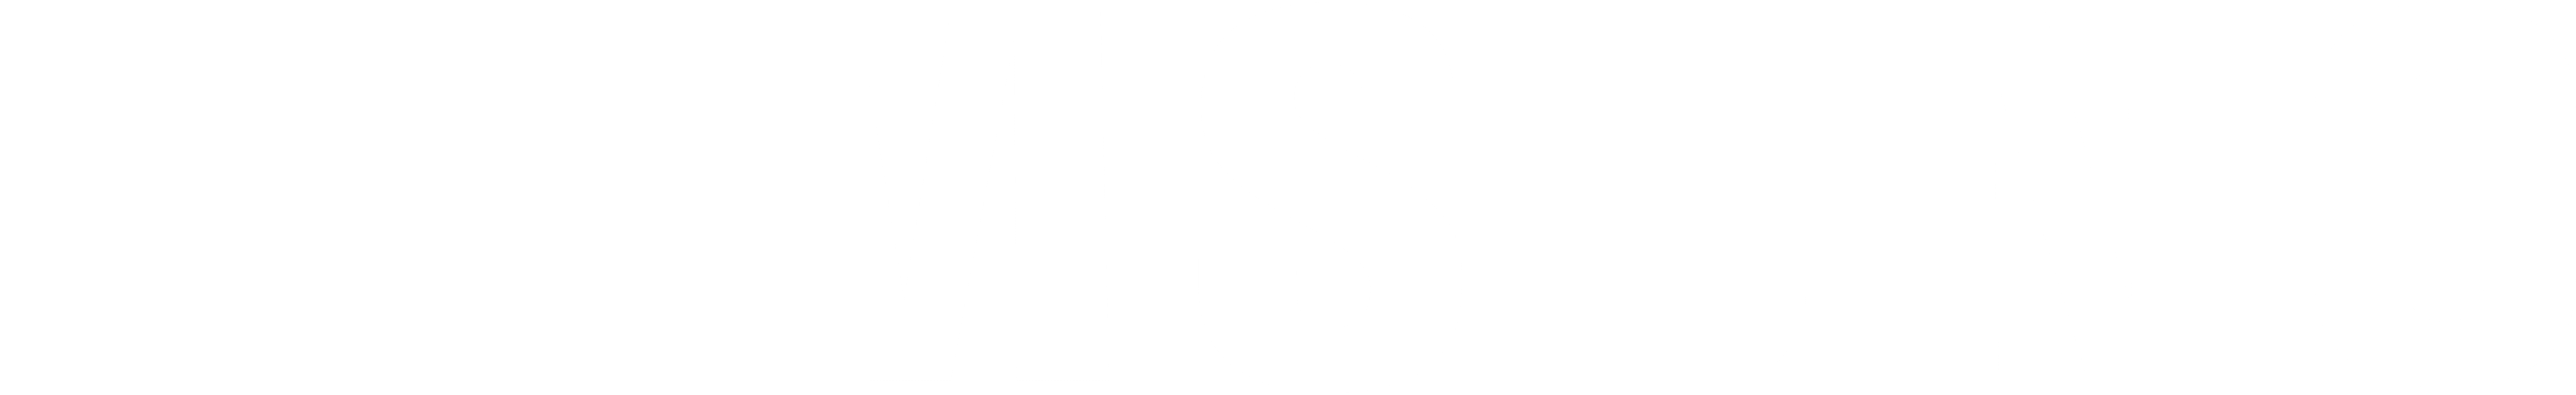 logo samsung invert